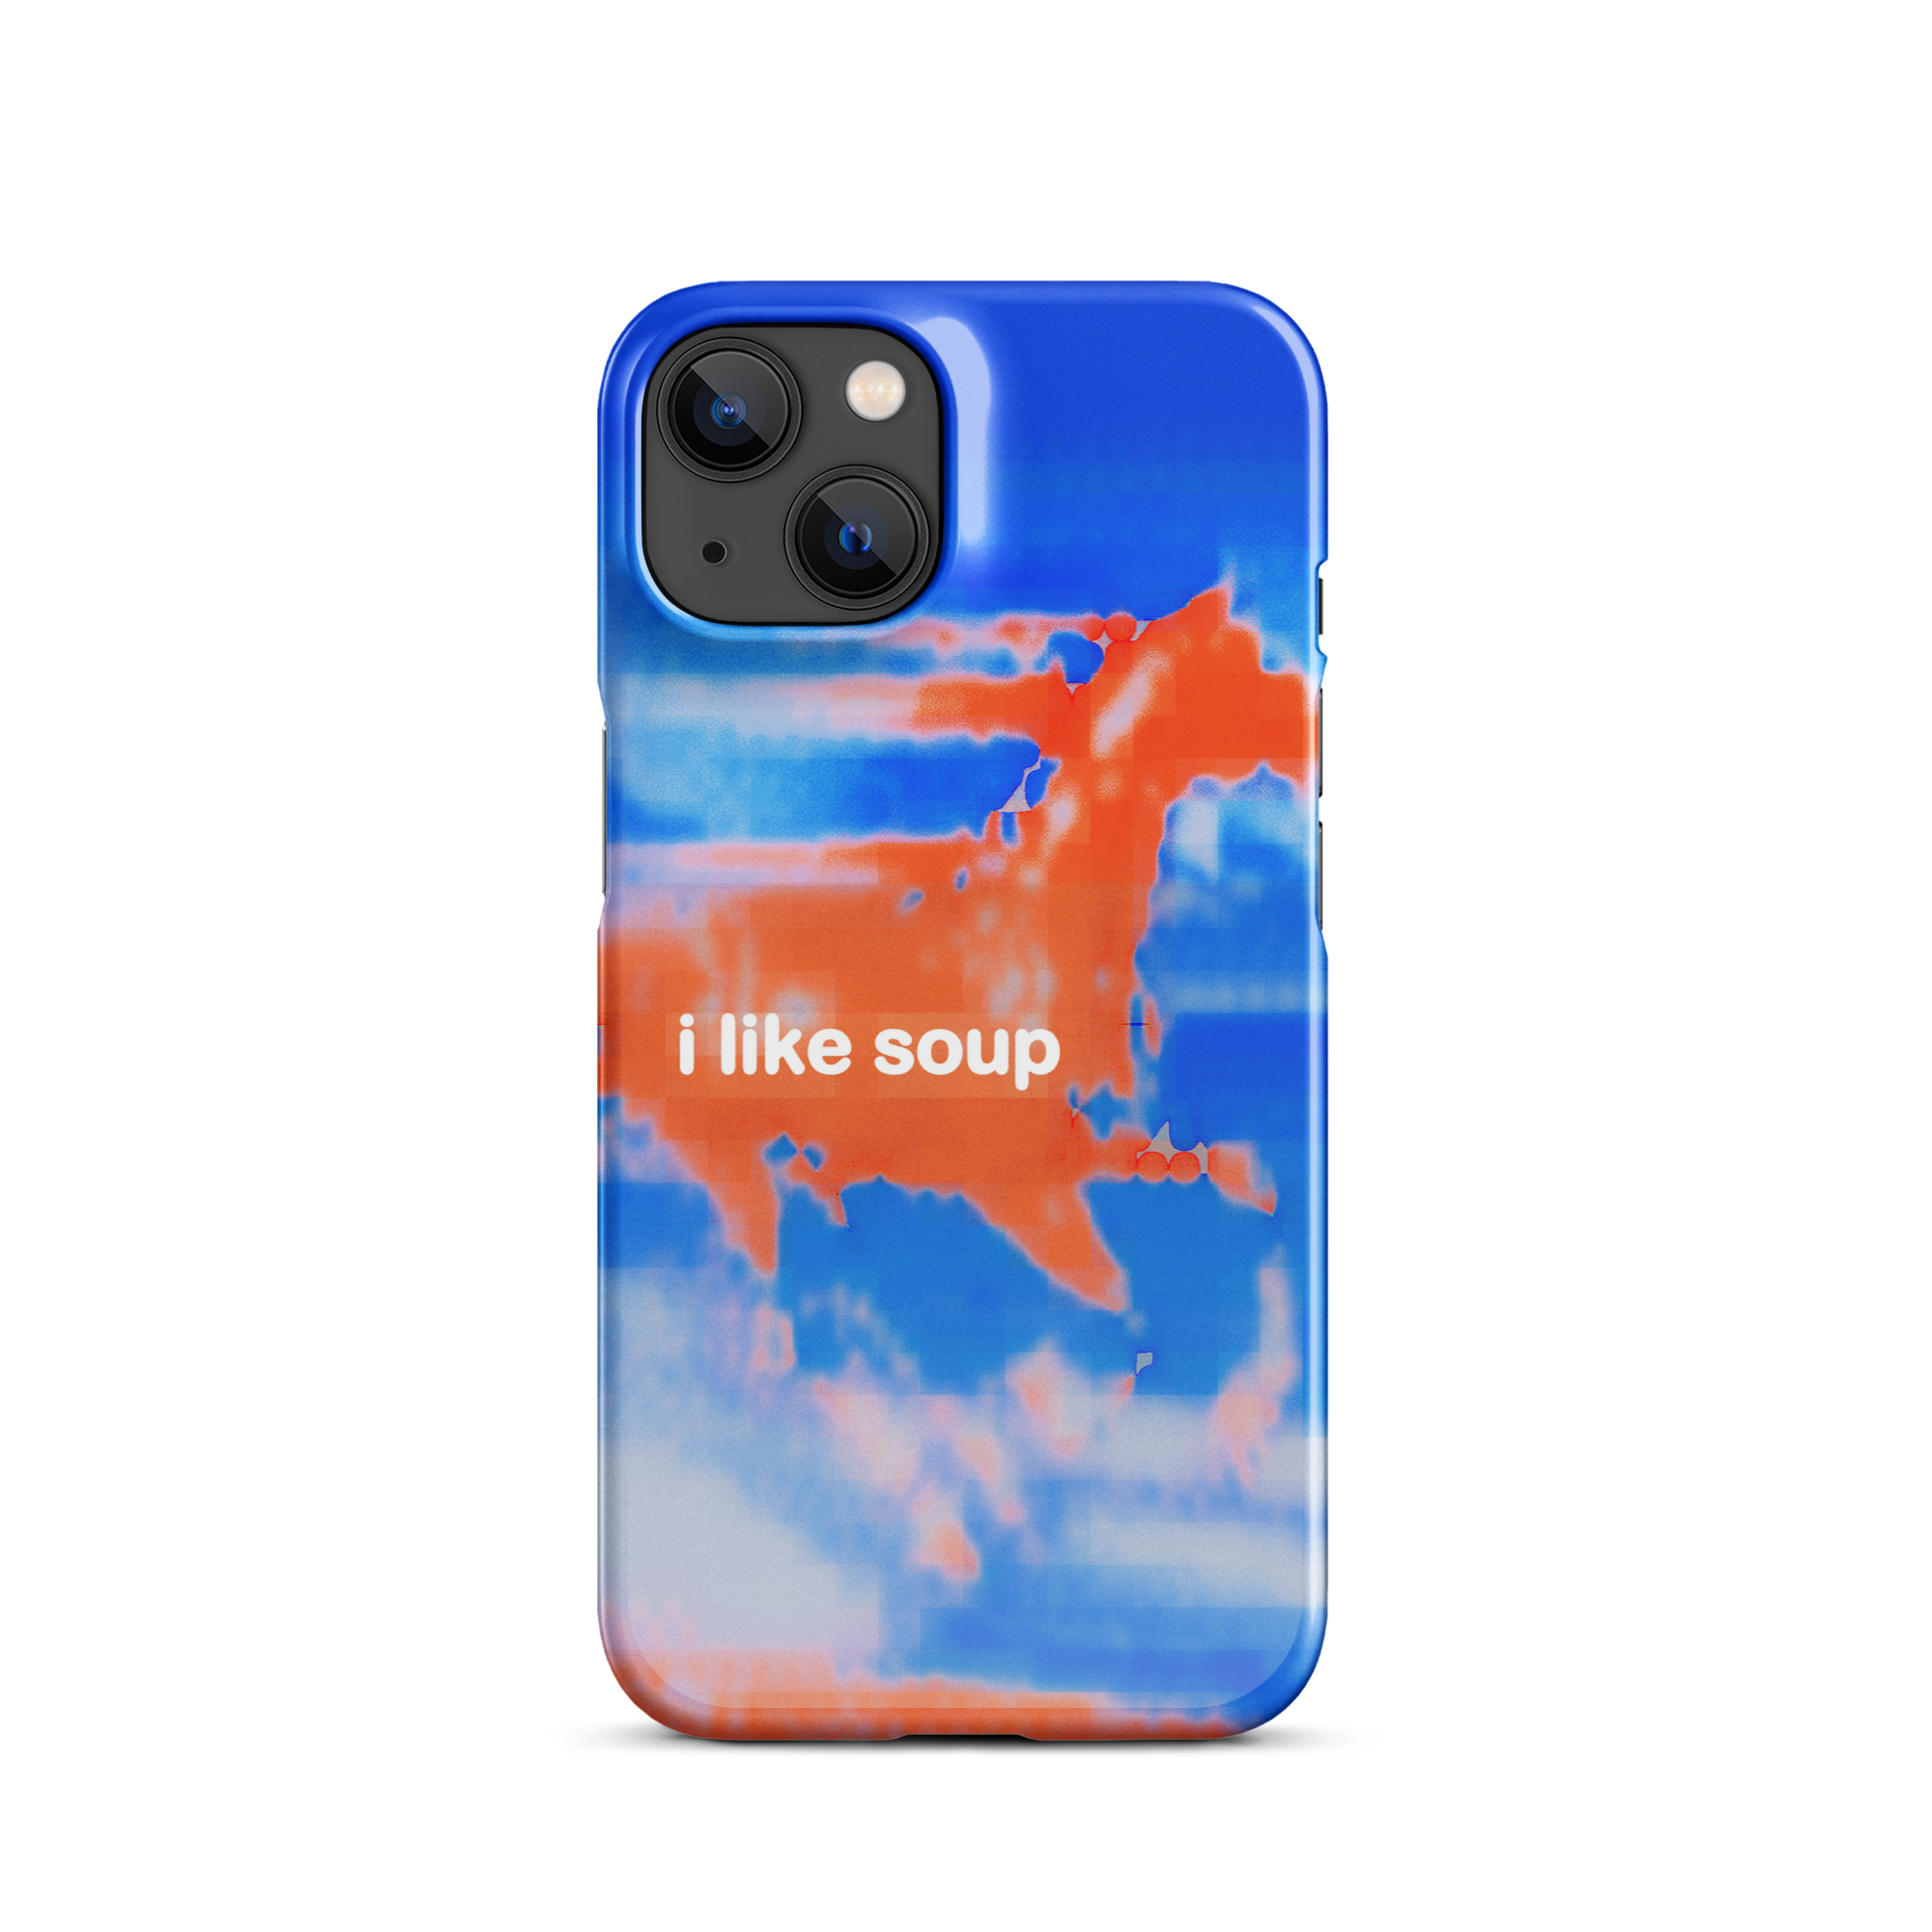 iphone snap case - i like soup